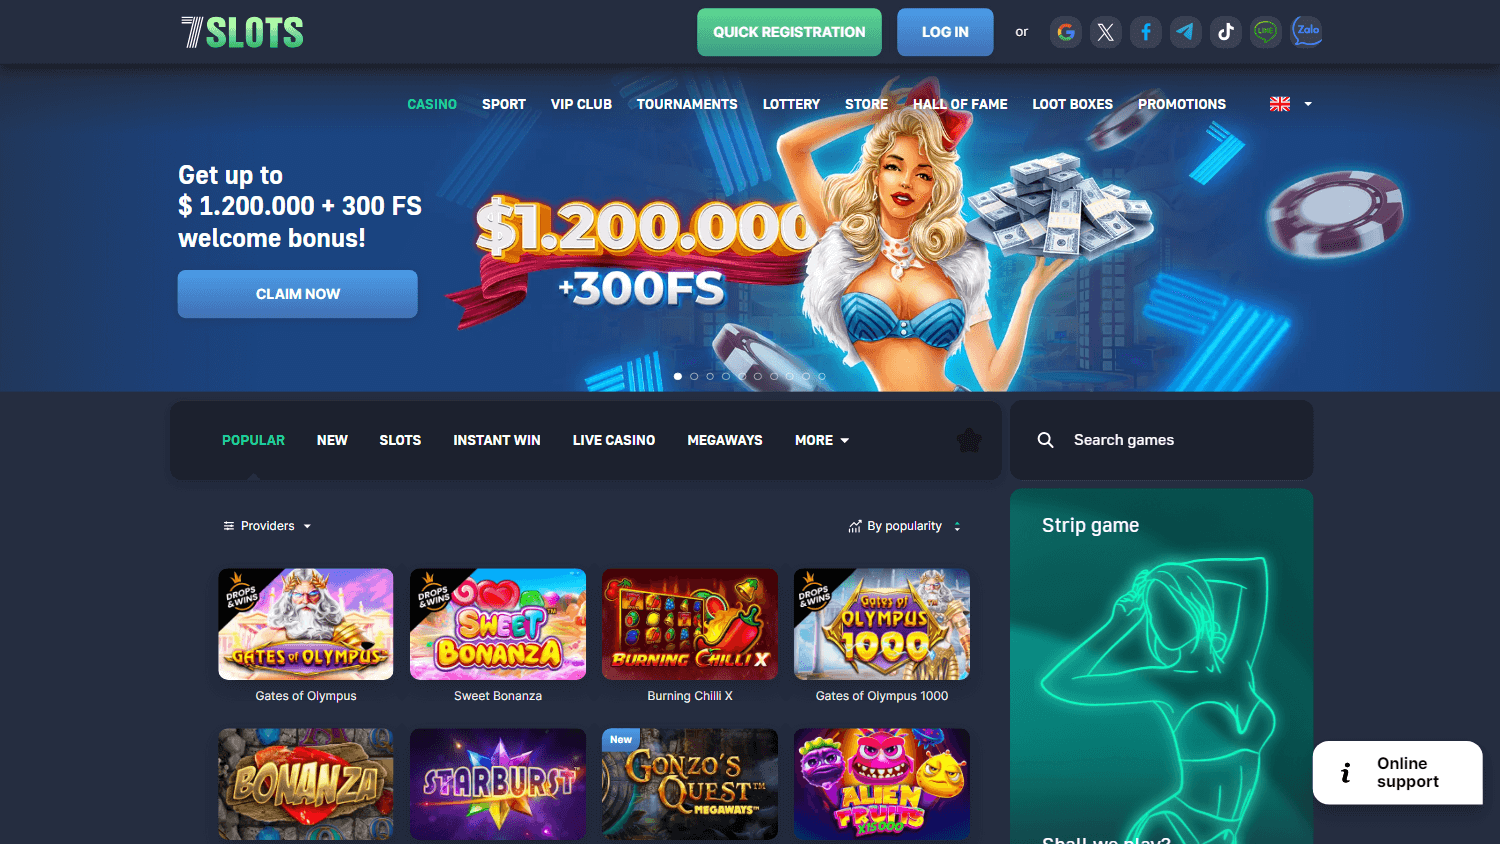 7slots_casino_promotions_desktop